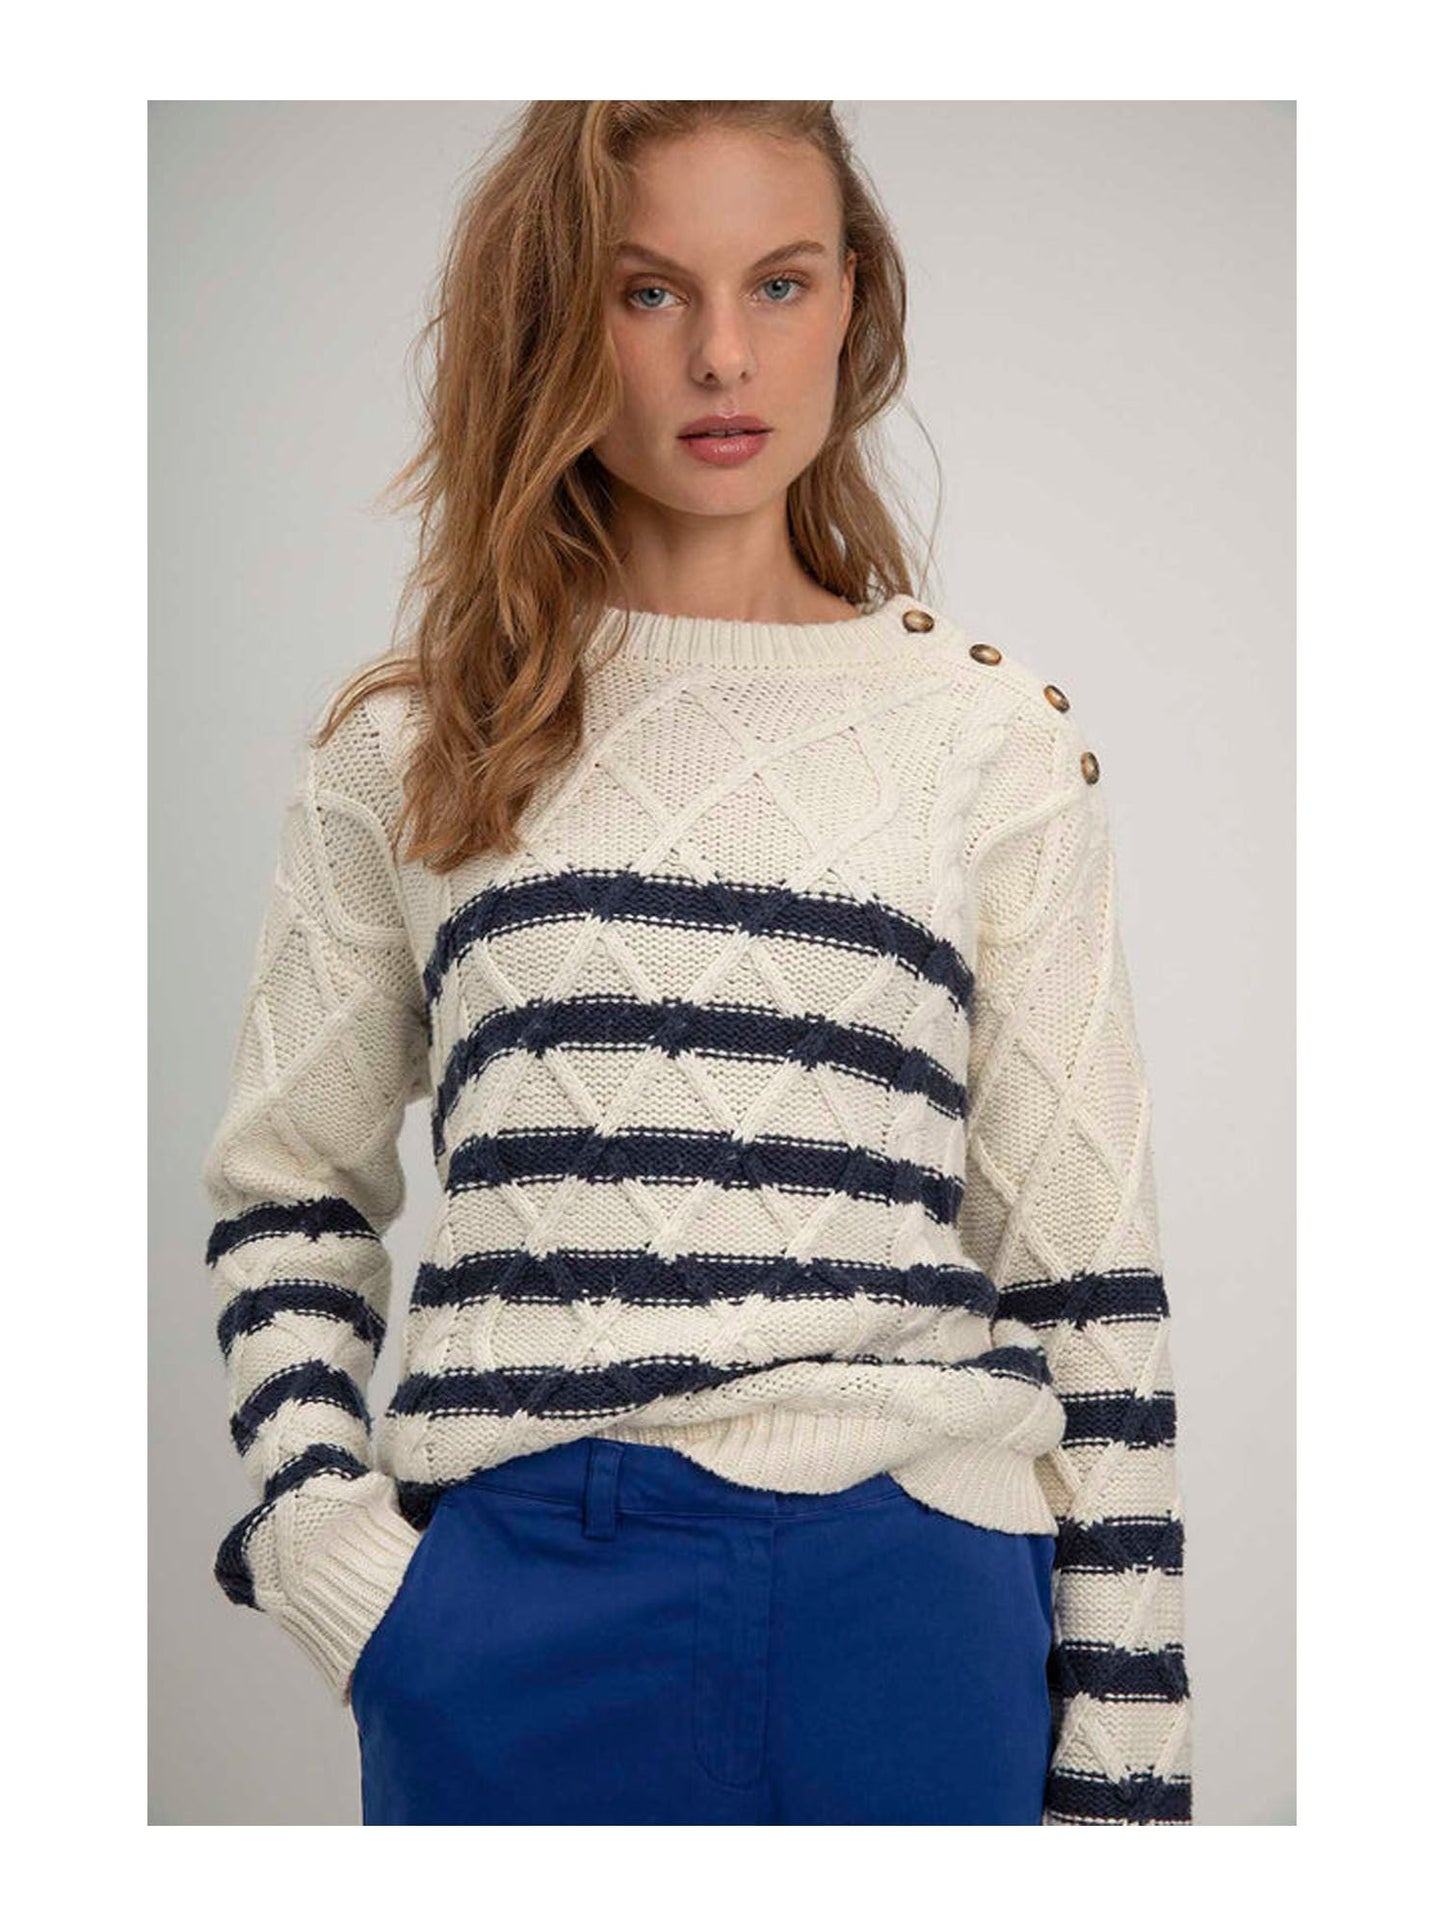 Josephine & Co | Soof sweater stripe off white